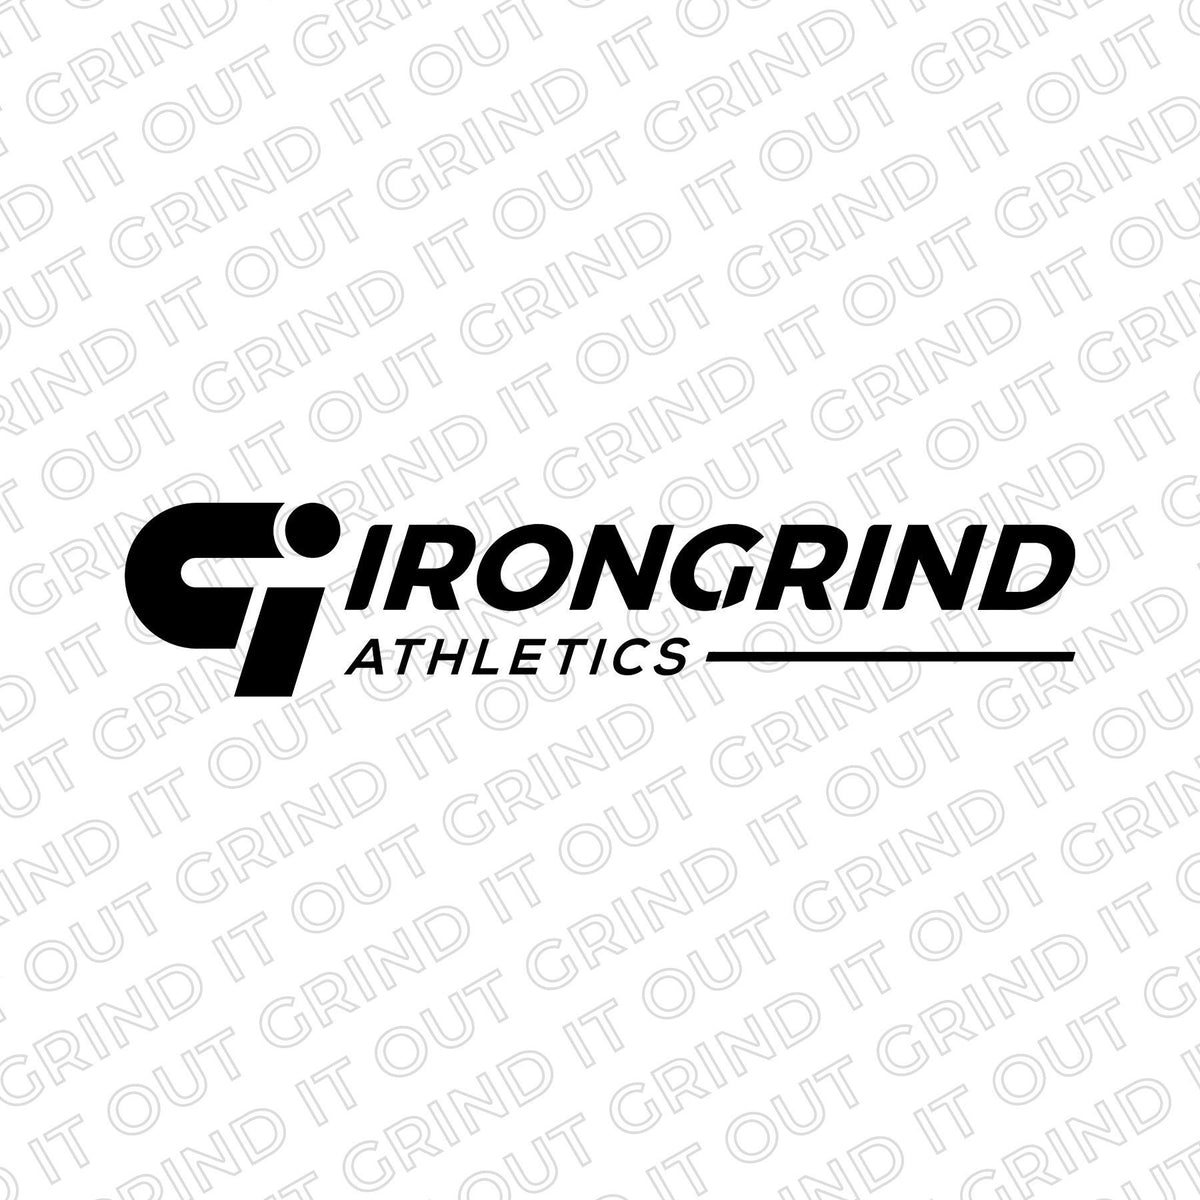 IronGrind Athletics